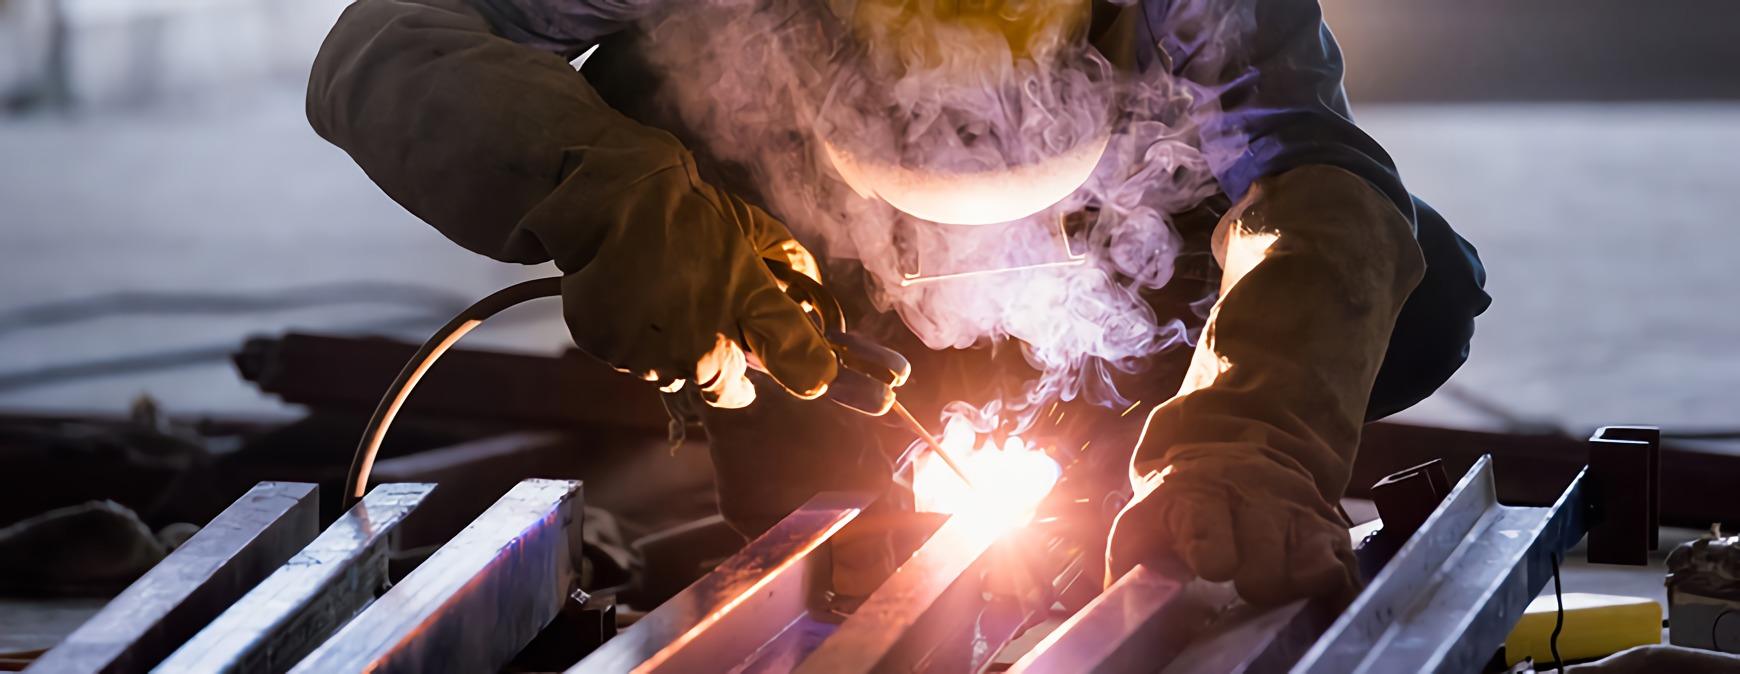 welding career skilled trade